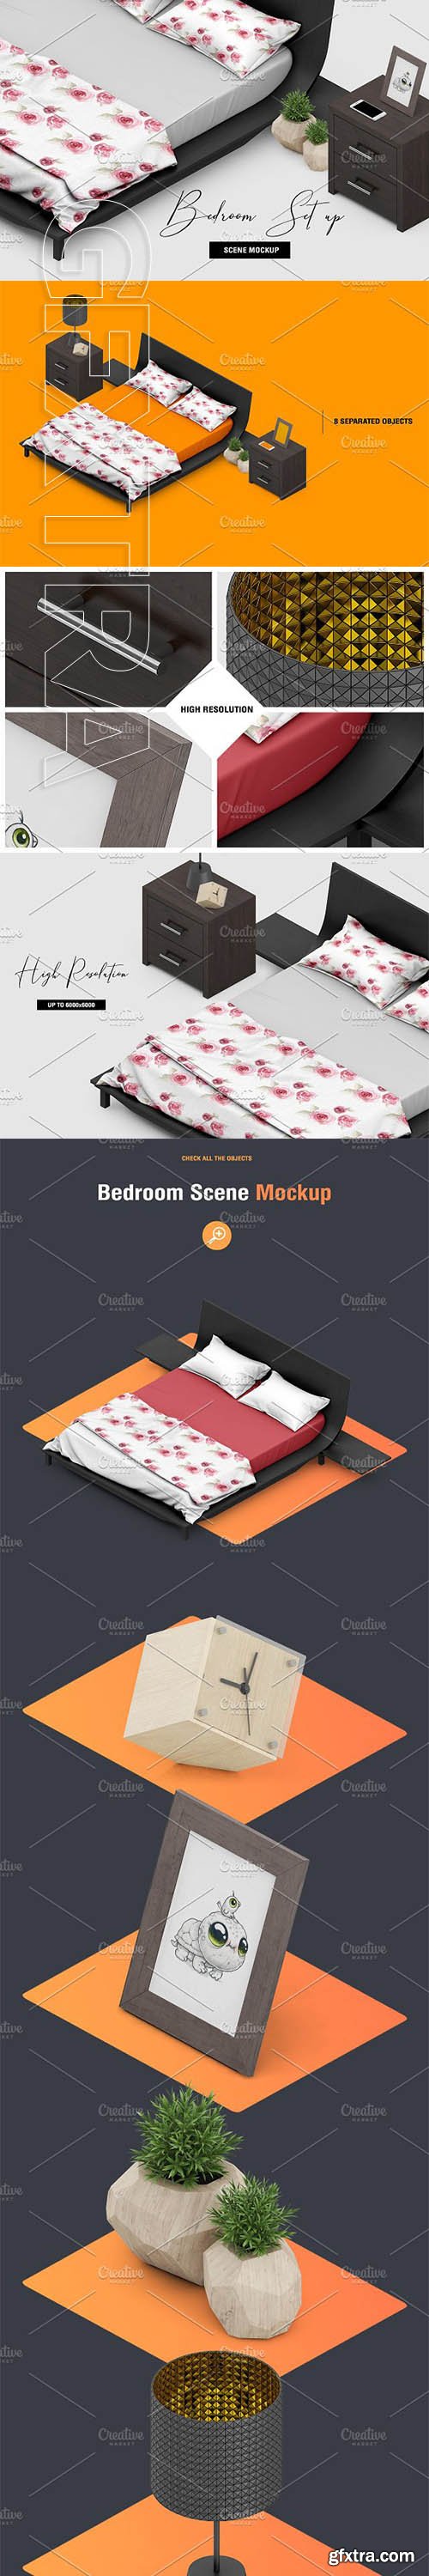 CreativeMarket - Bedroom Scene Set up Mock-up 2295119